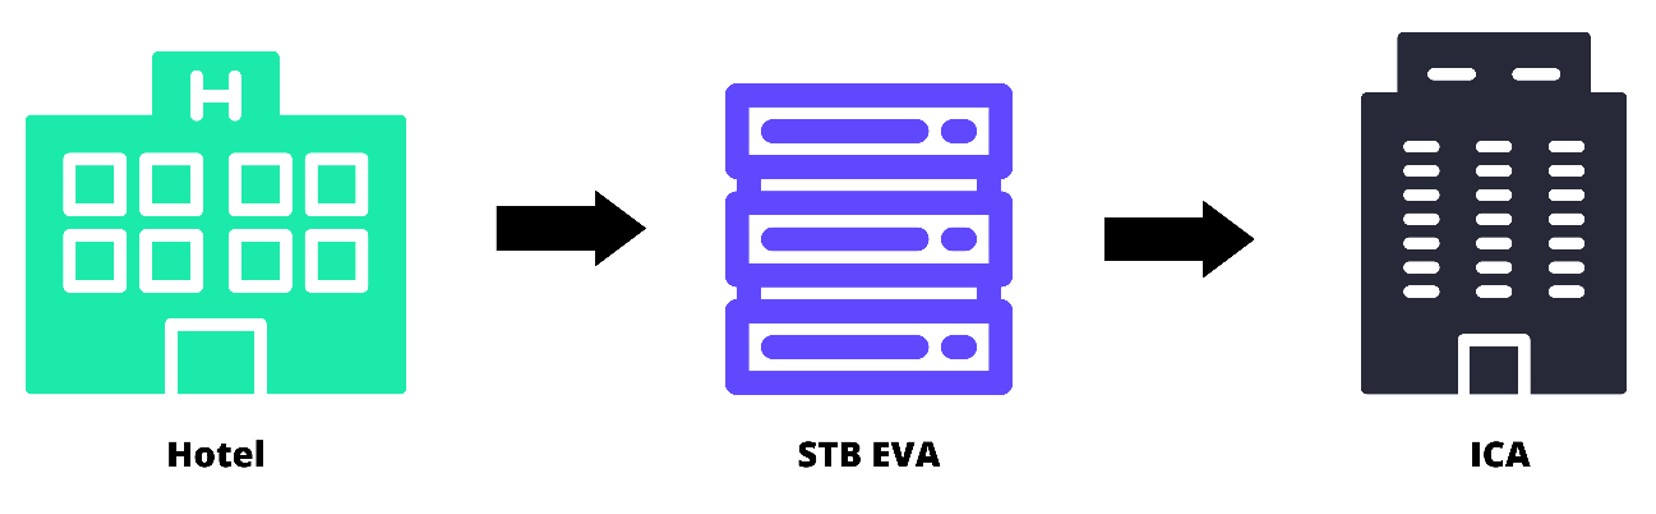 Data Flow_STB EVA